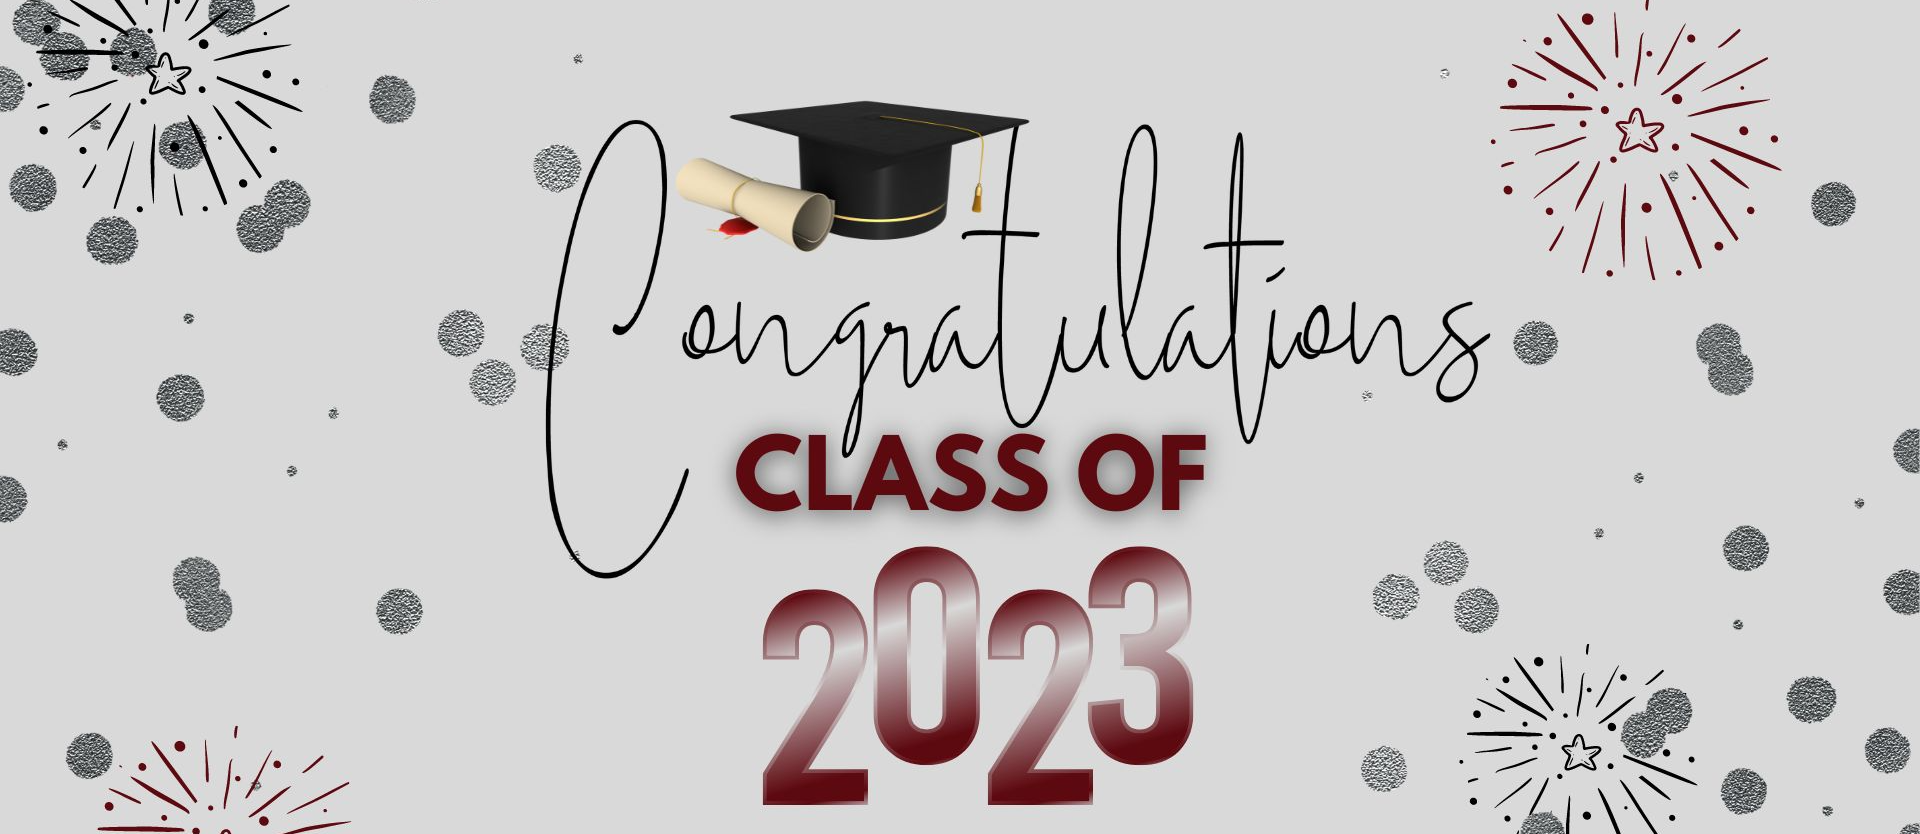 Congrats Class of 2023